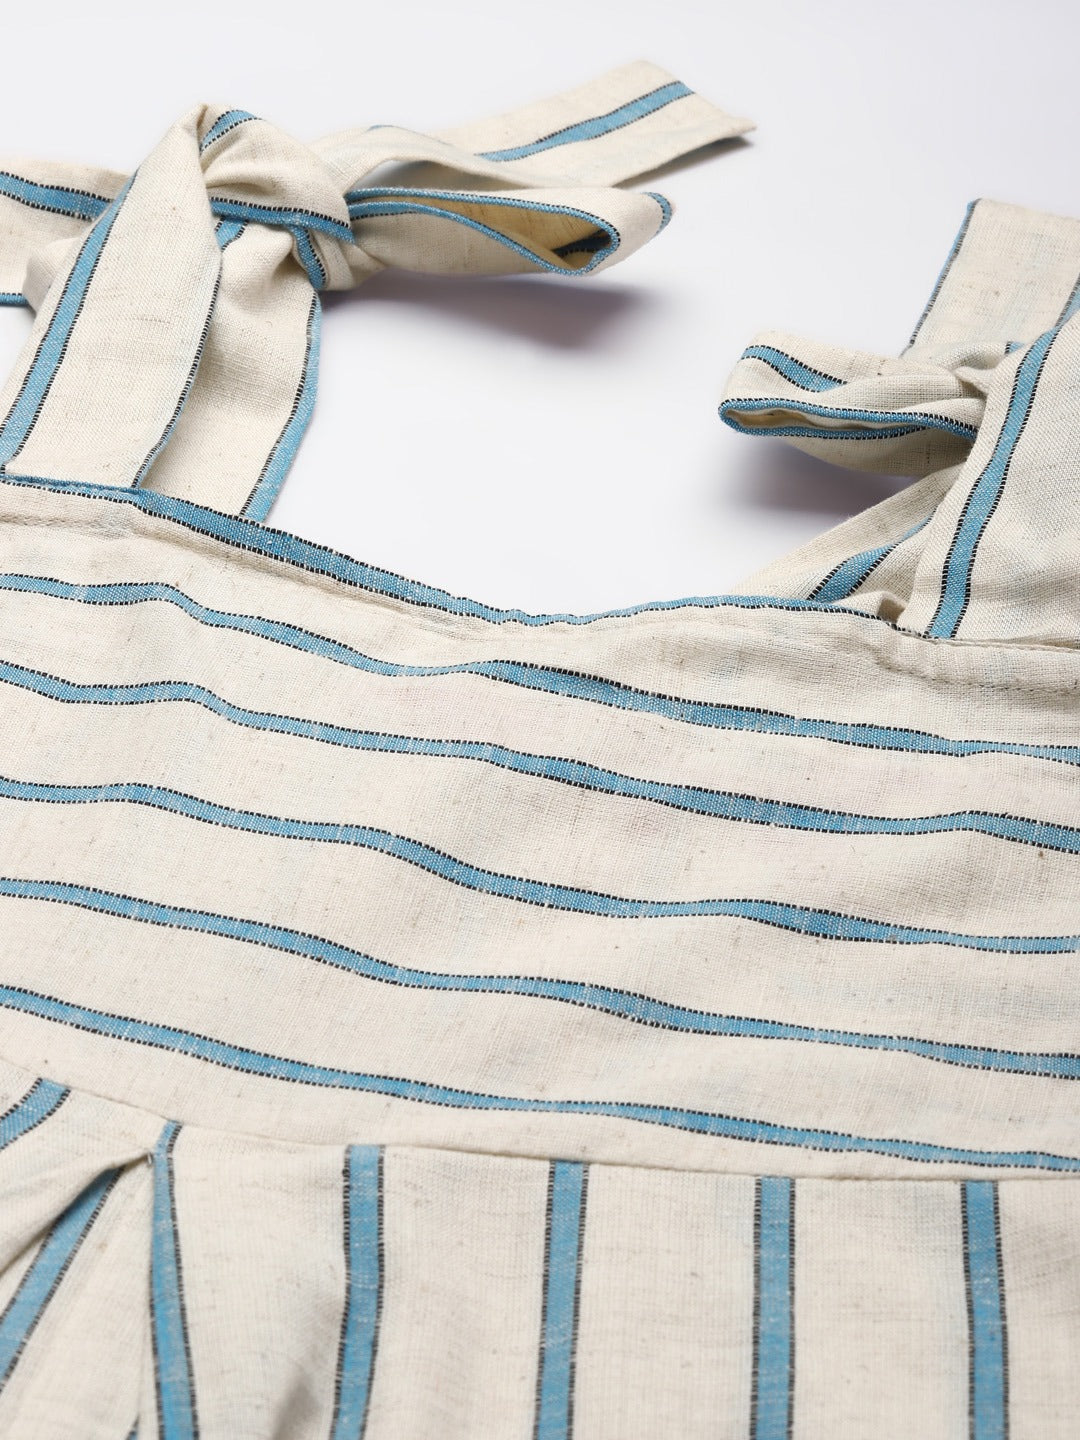 Cottinfab Off White & Blue Striped Cotton Pleated Culotte Jumpsuit